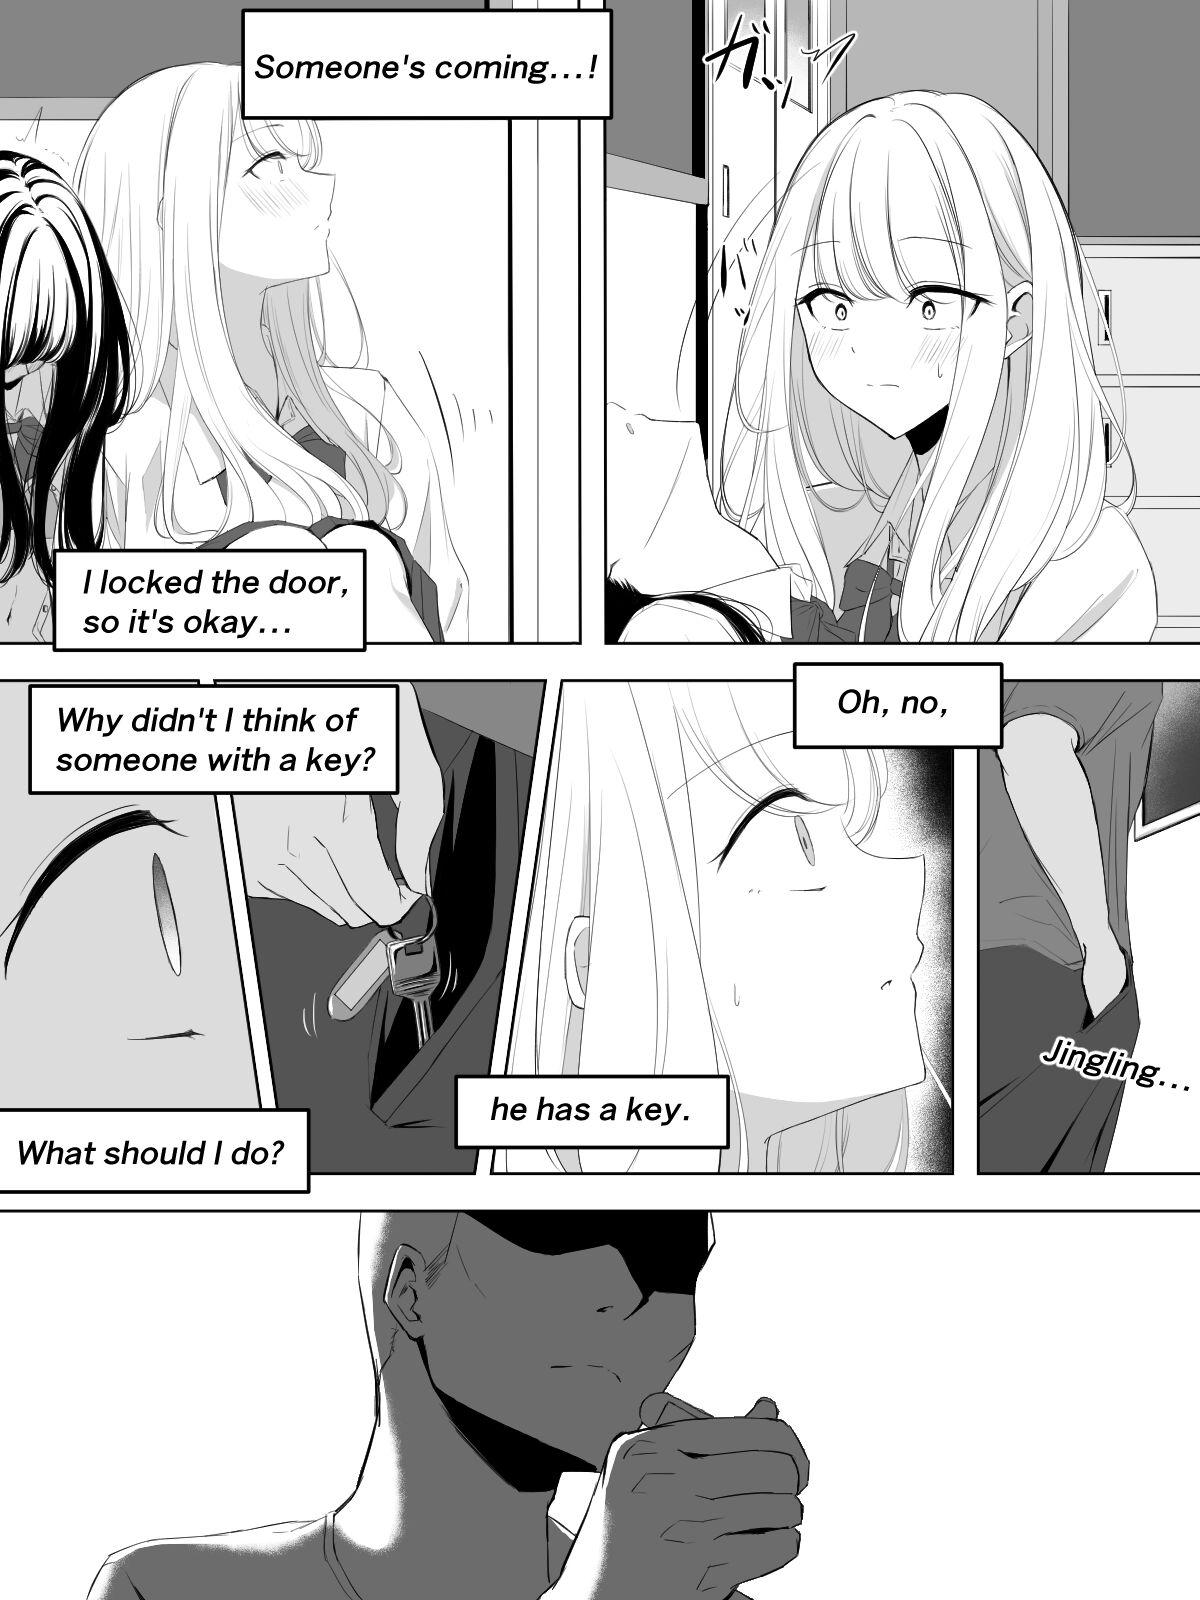 Yuri comic Part 1,2 and 3. 16